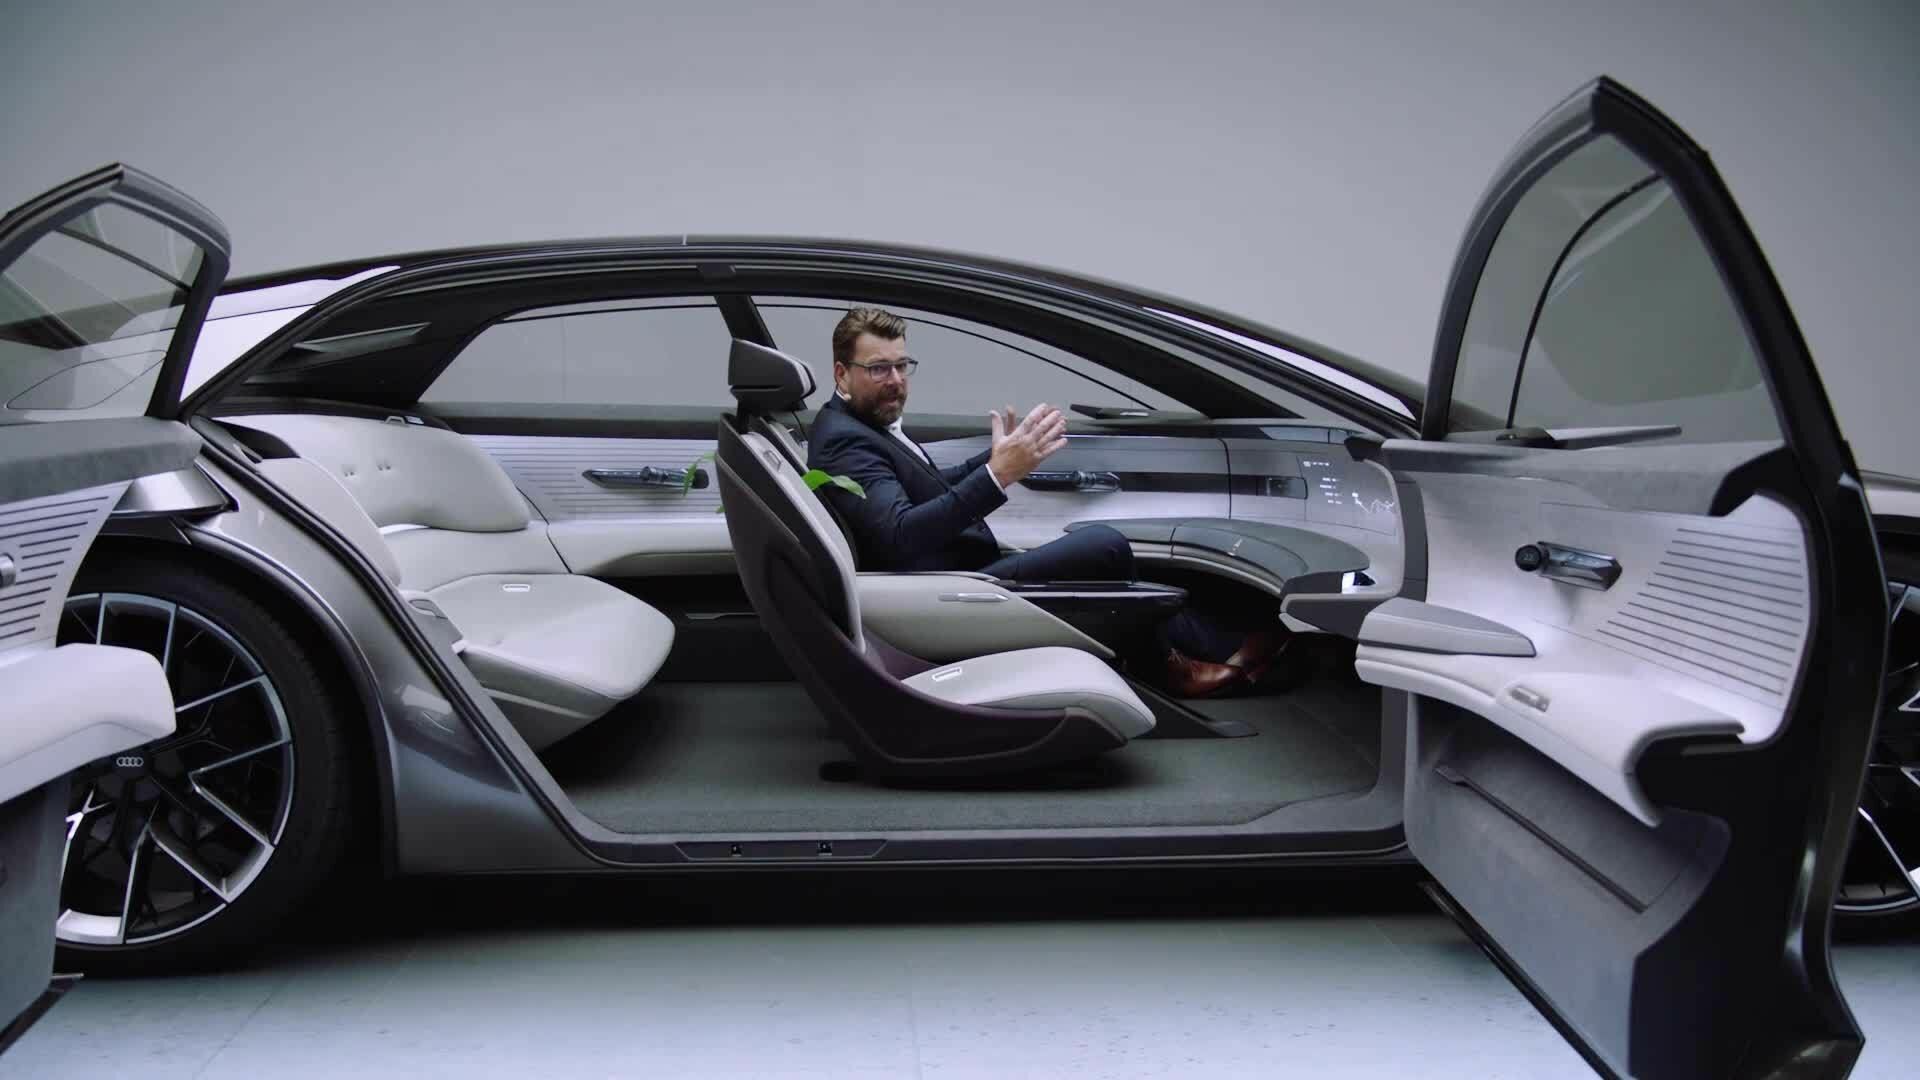 Oliver Hoffmann präsentiert den neuen Audi grandsphere concept